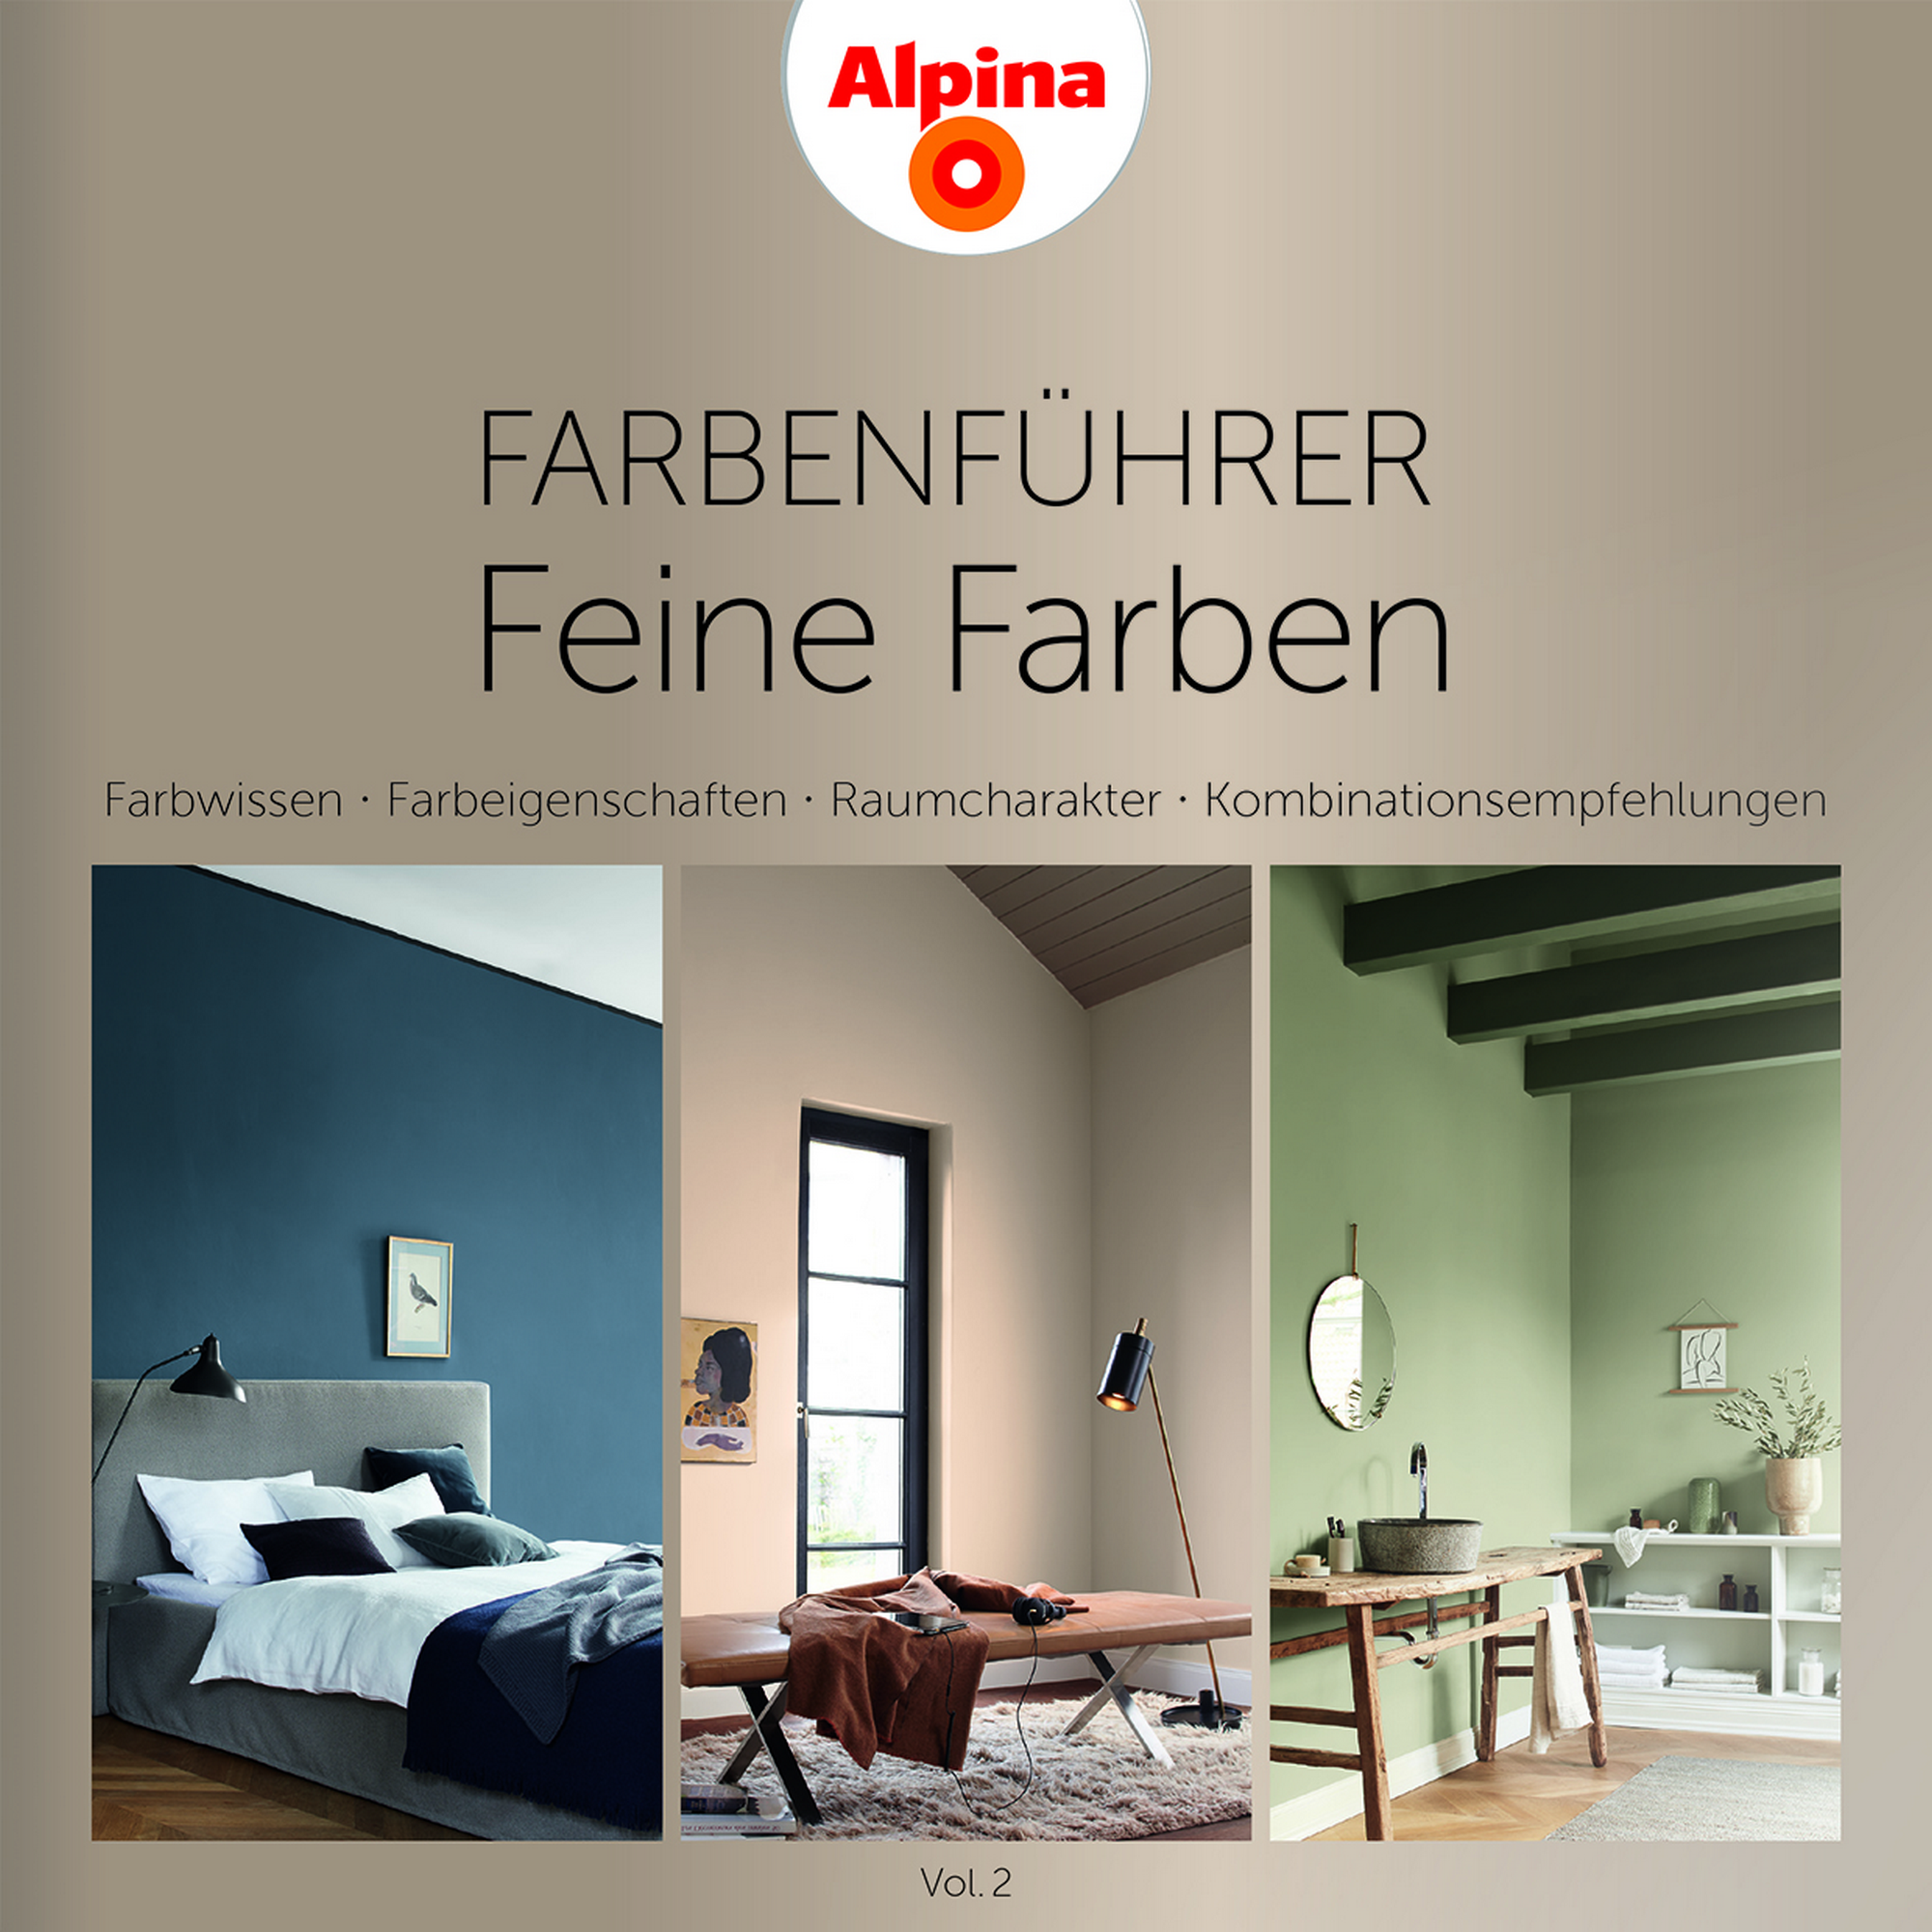 Farbenführer 'Feine Farben' 2021 + product picture